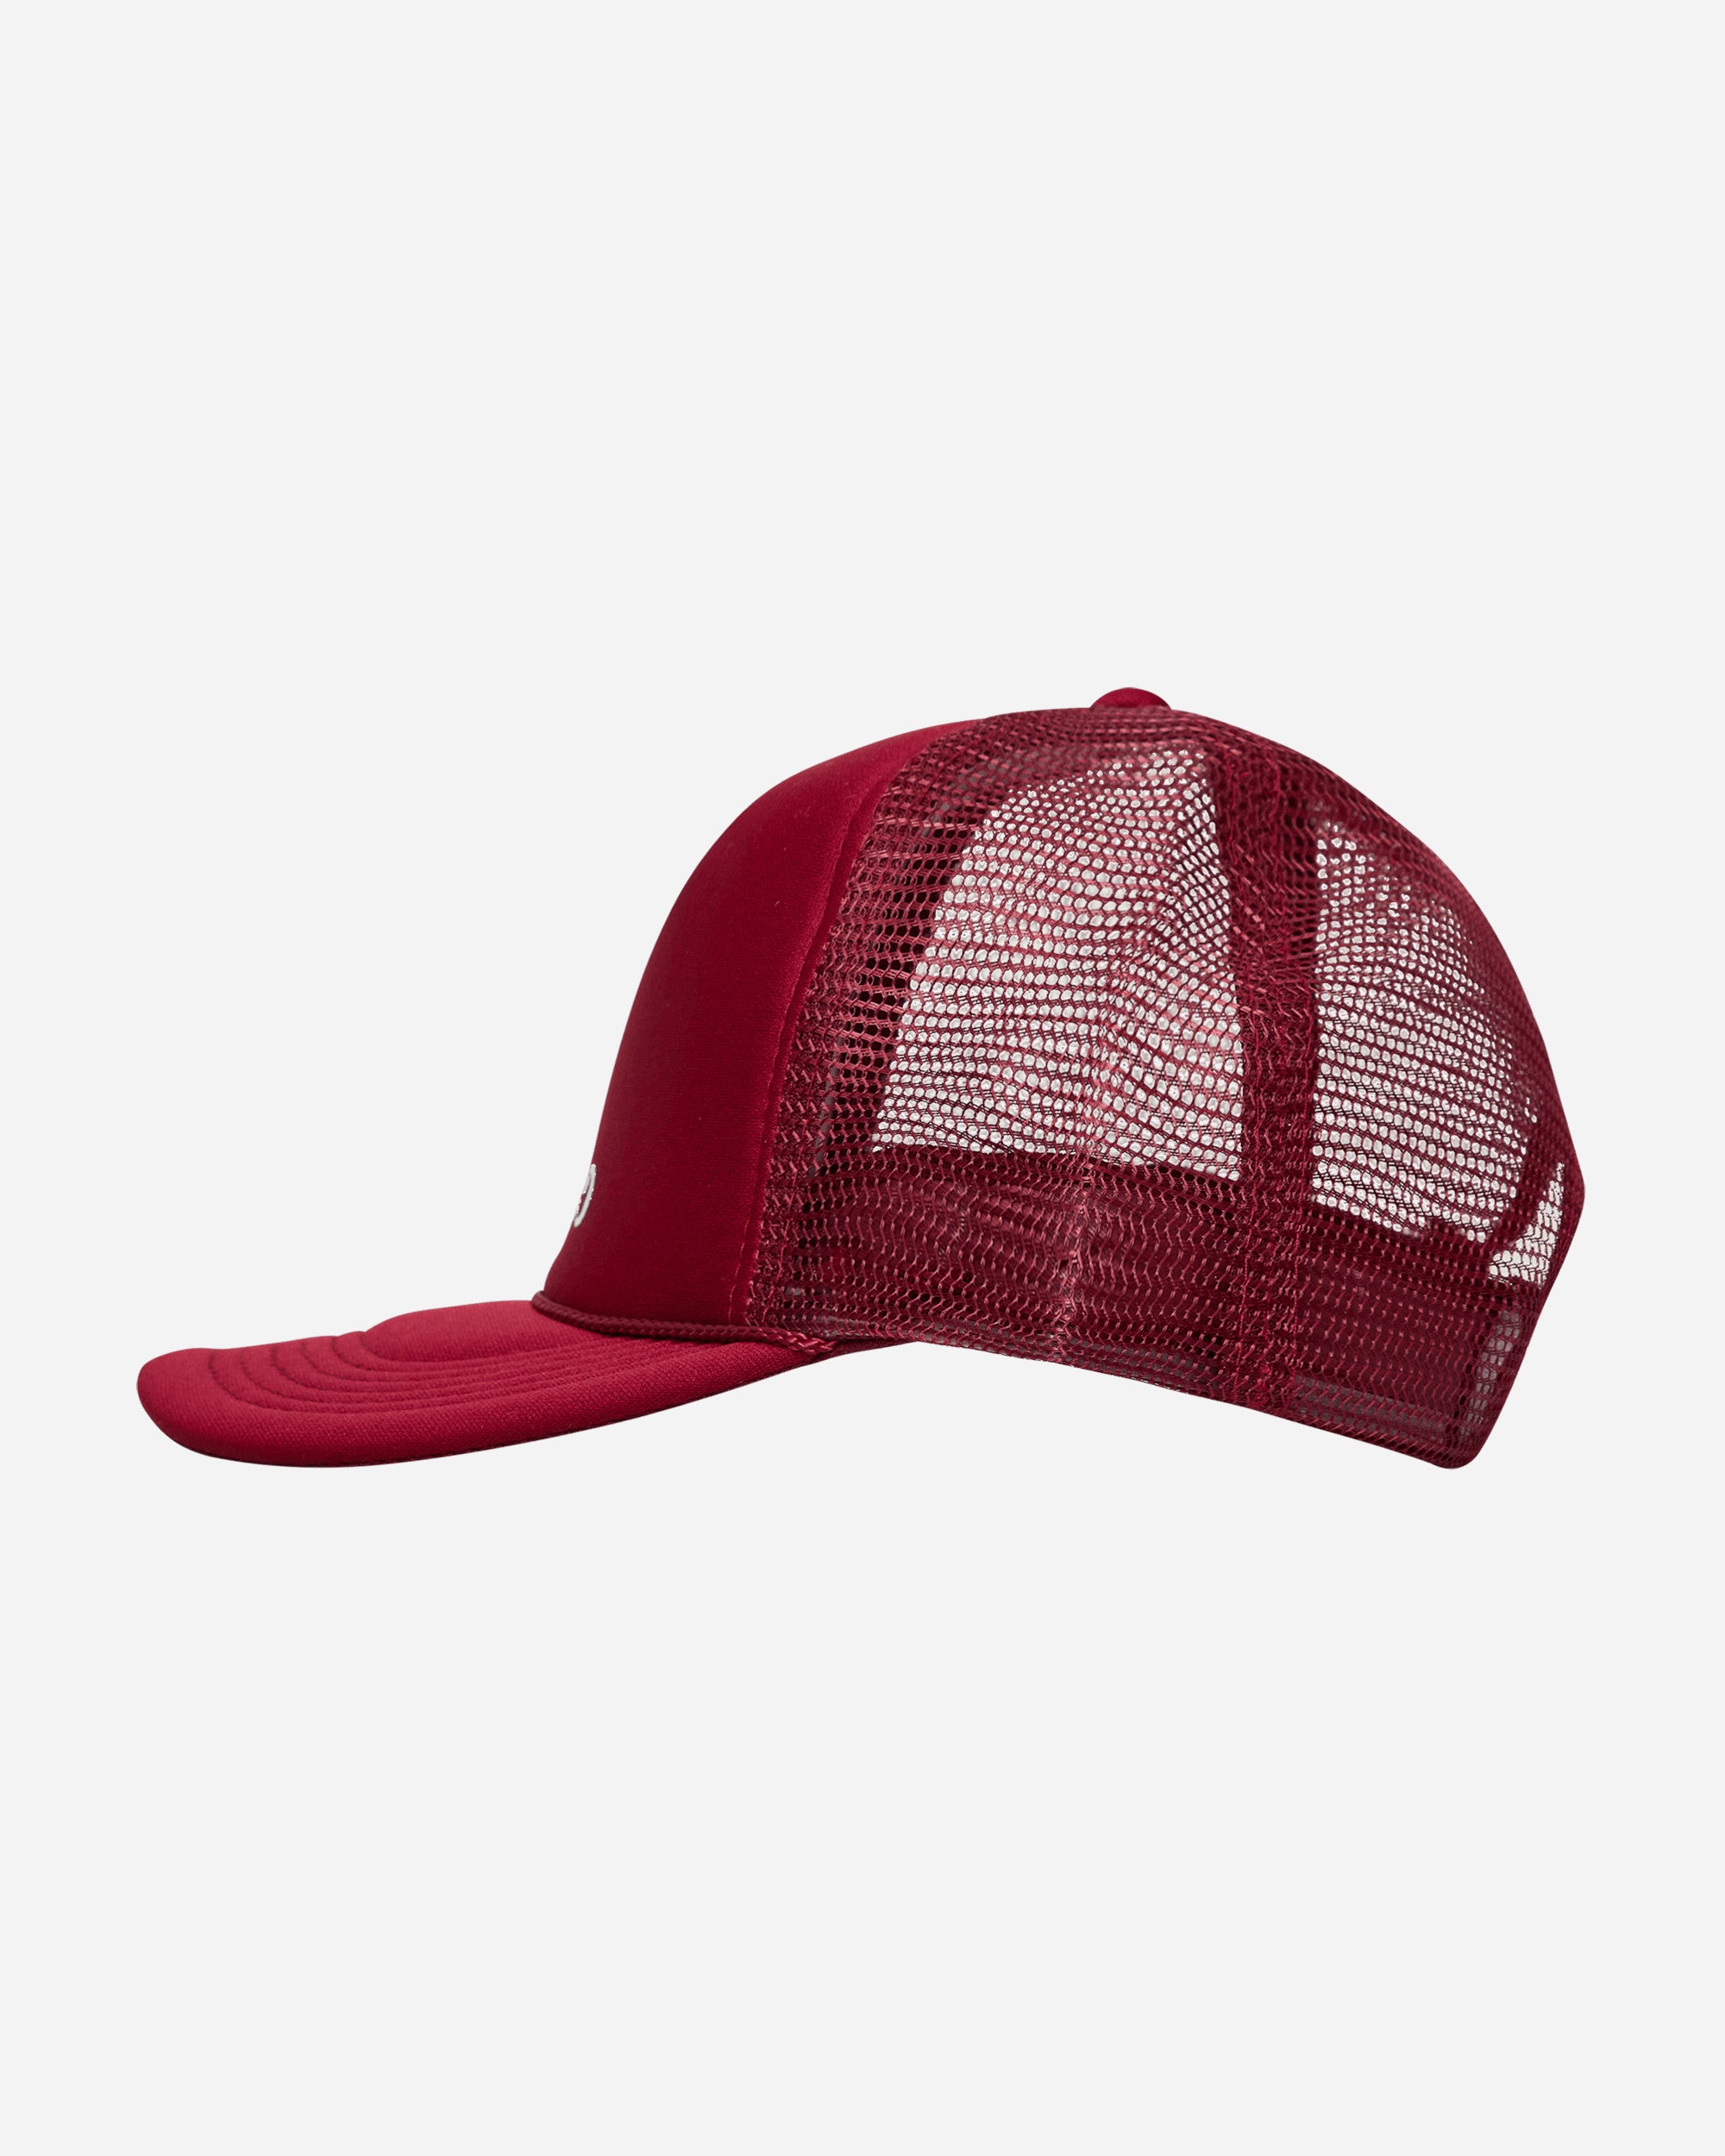 GADID ANONIEM JOULE / RED キャップ - 帽子